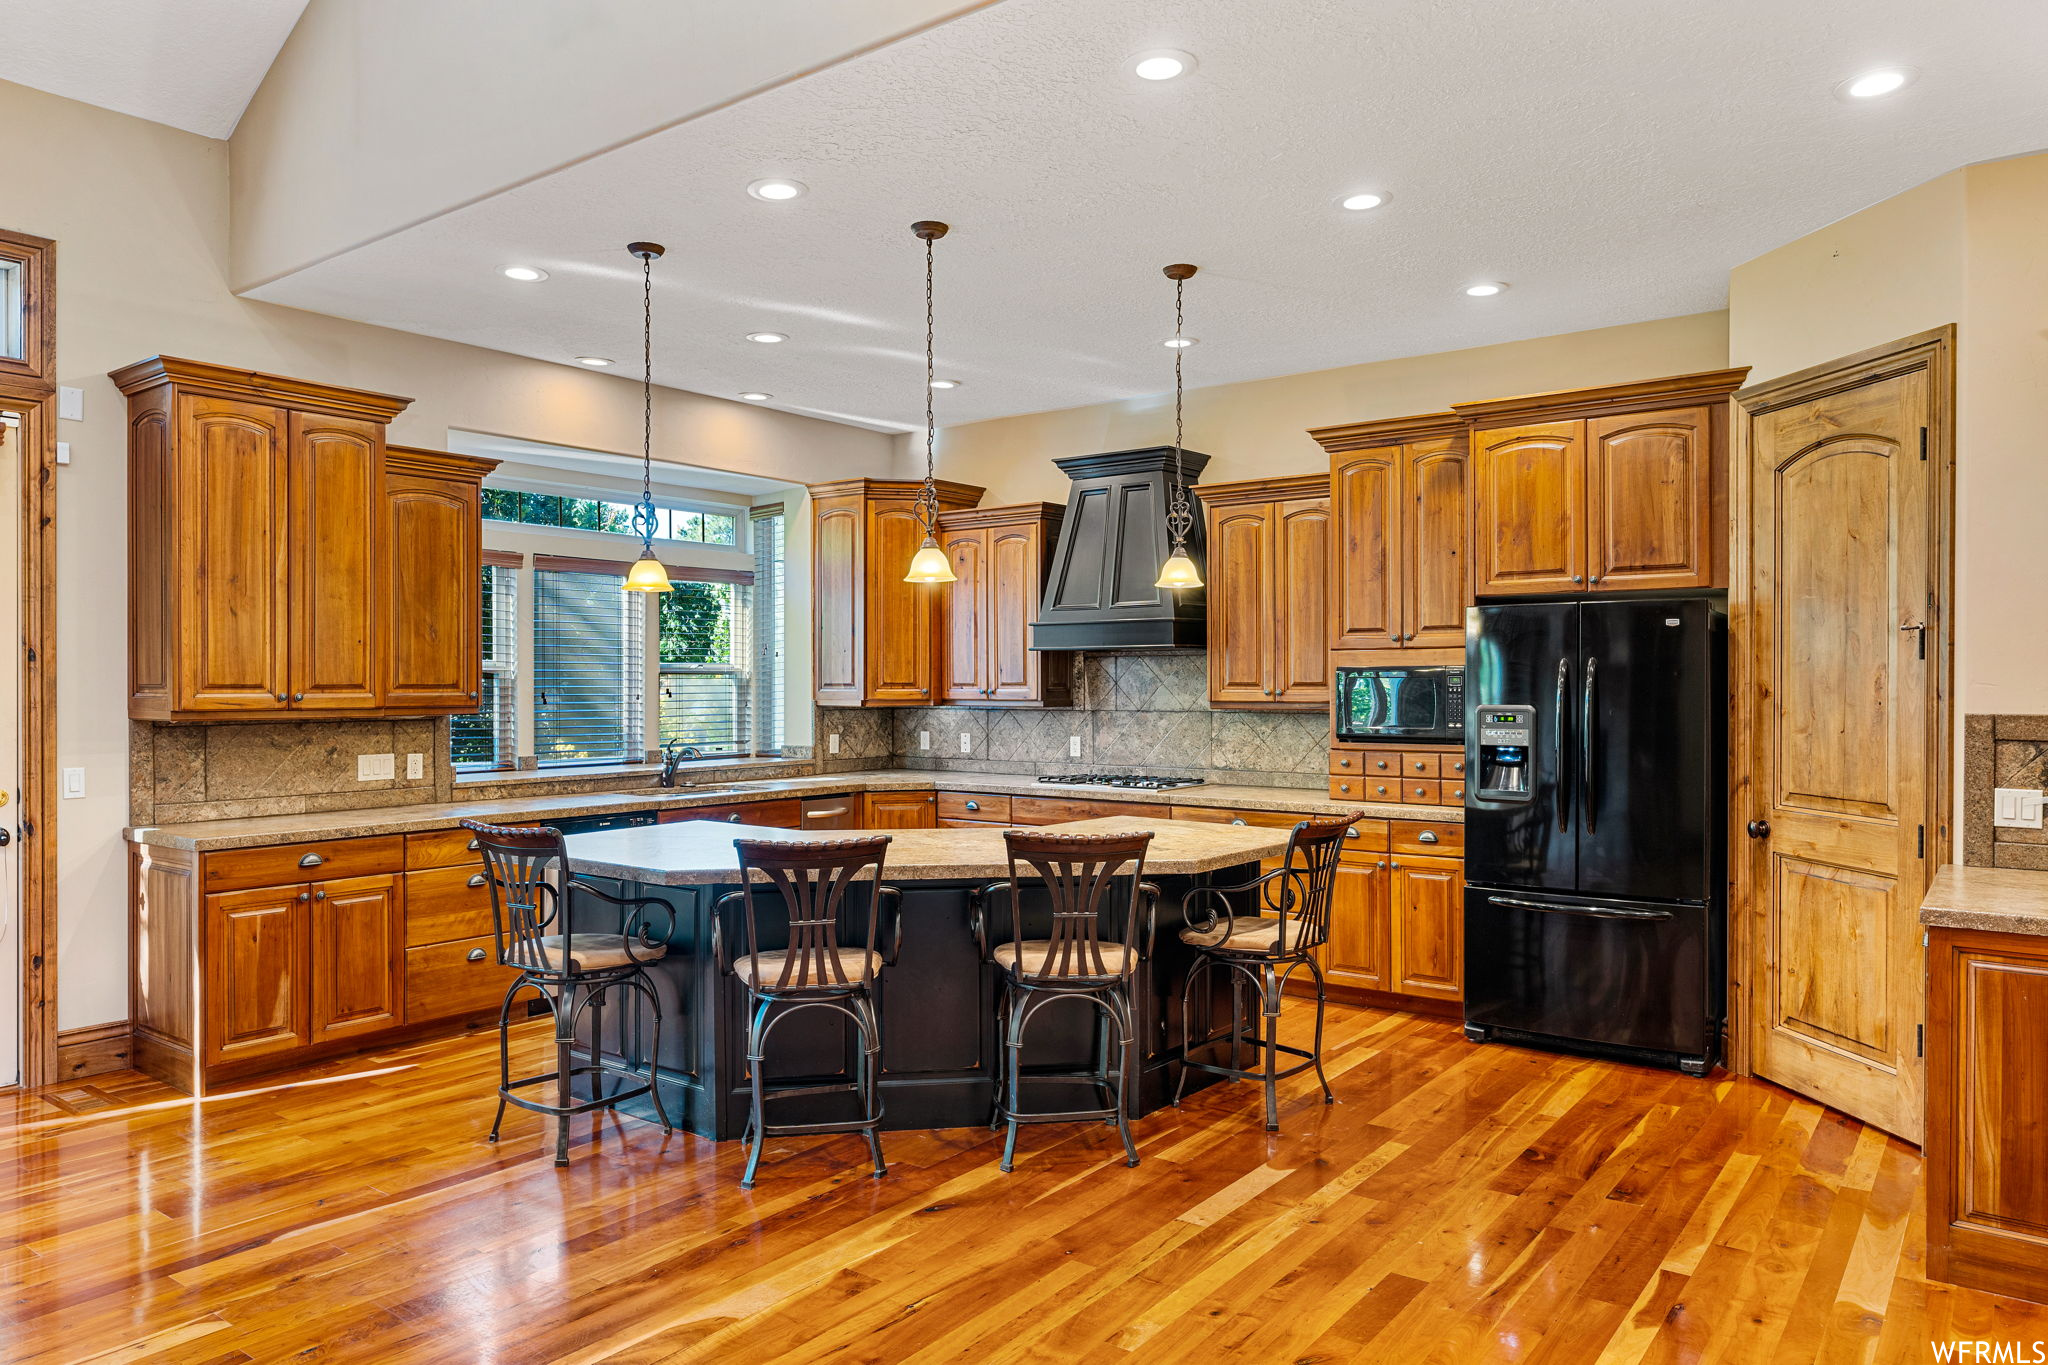 Kitchen featuring decorative light fixtures, premium range hood, a center island, and light hardwood floors